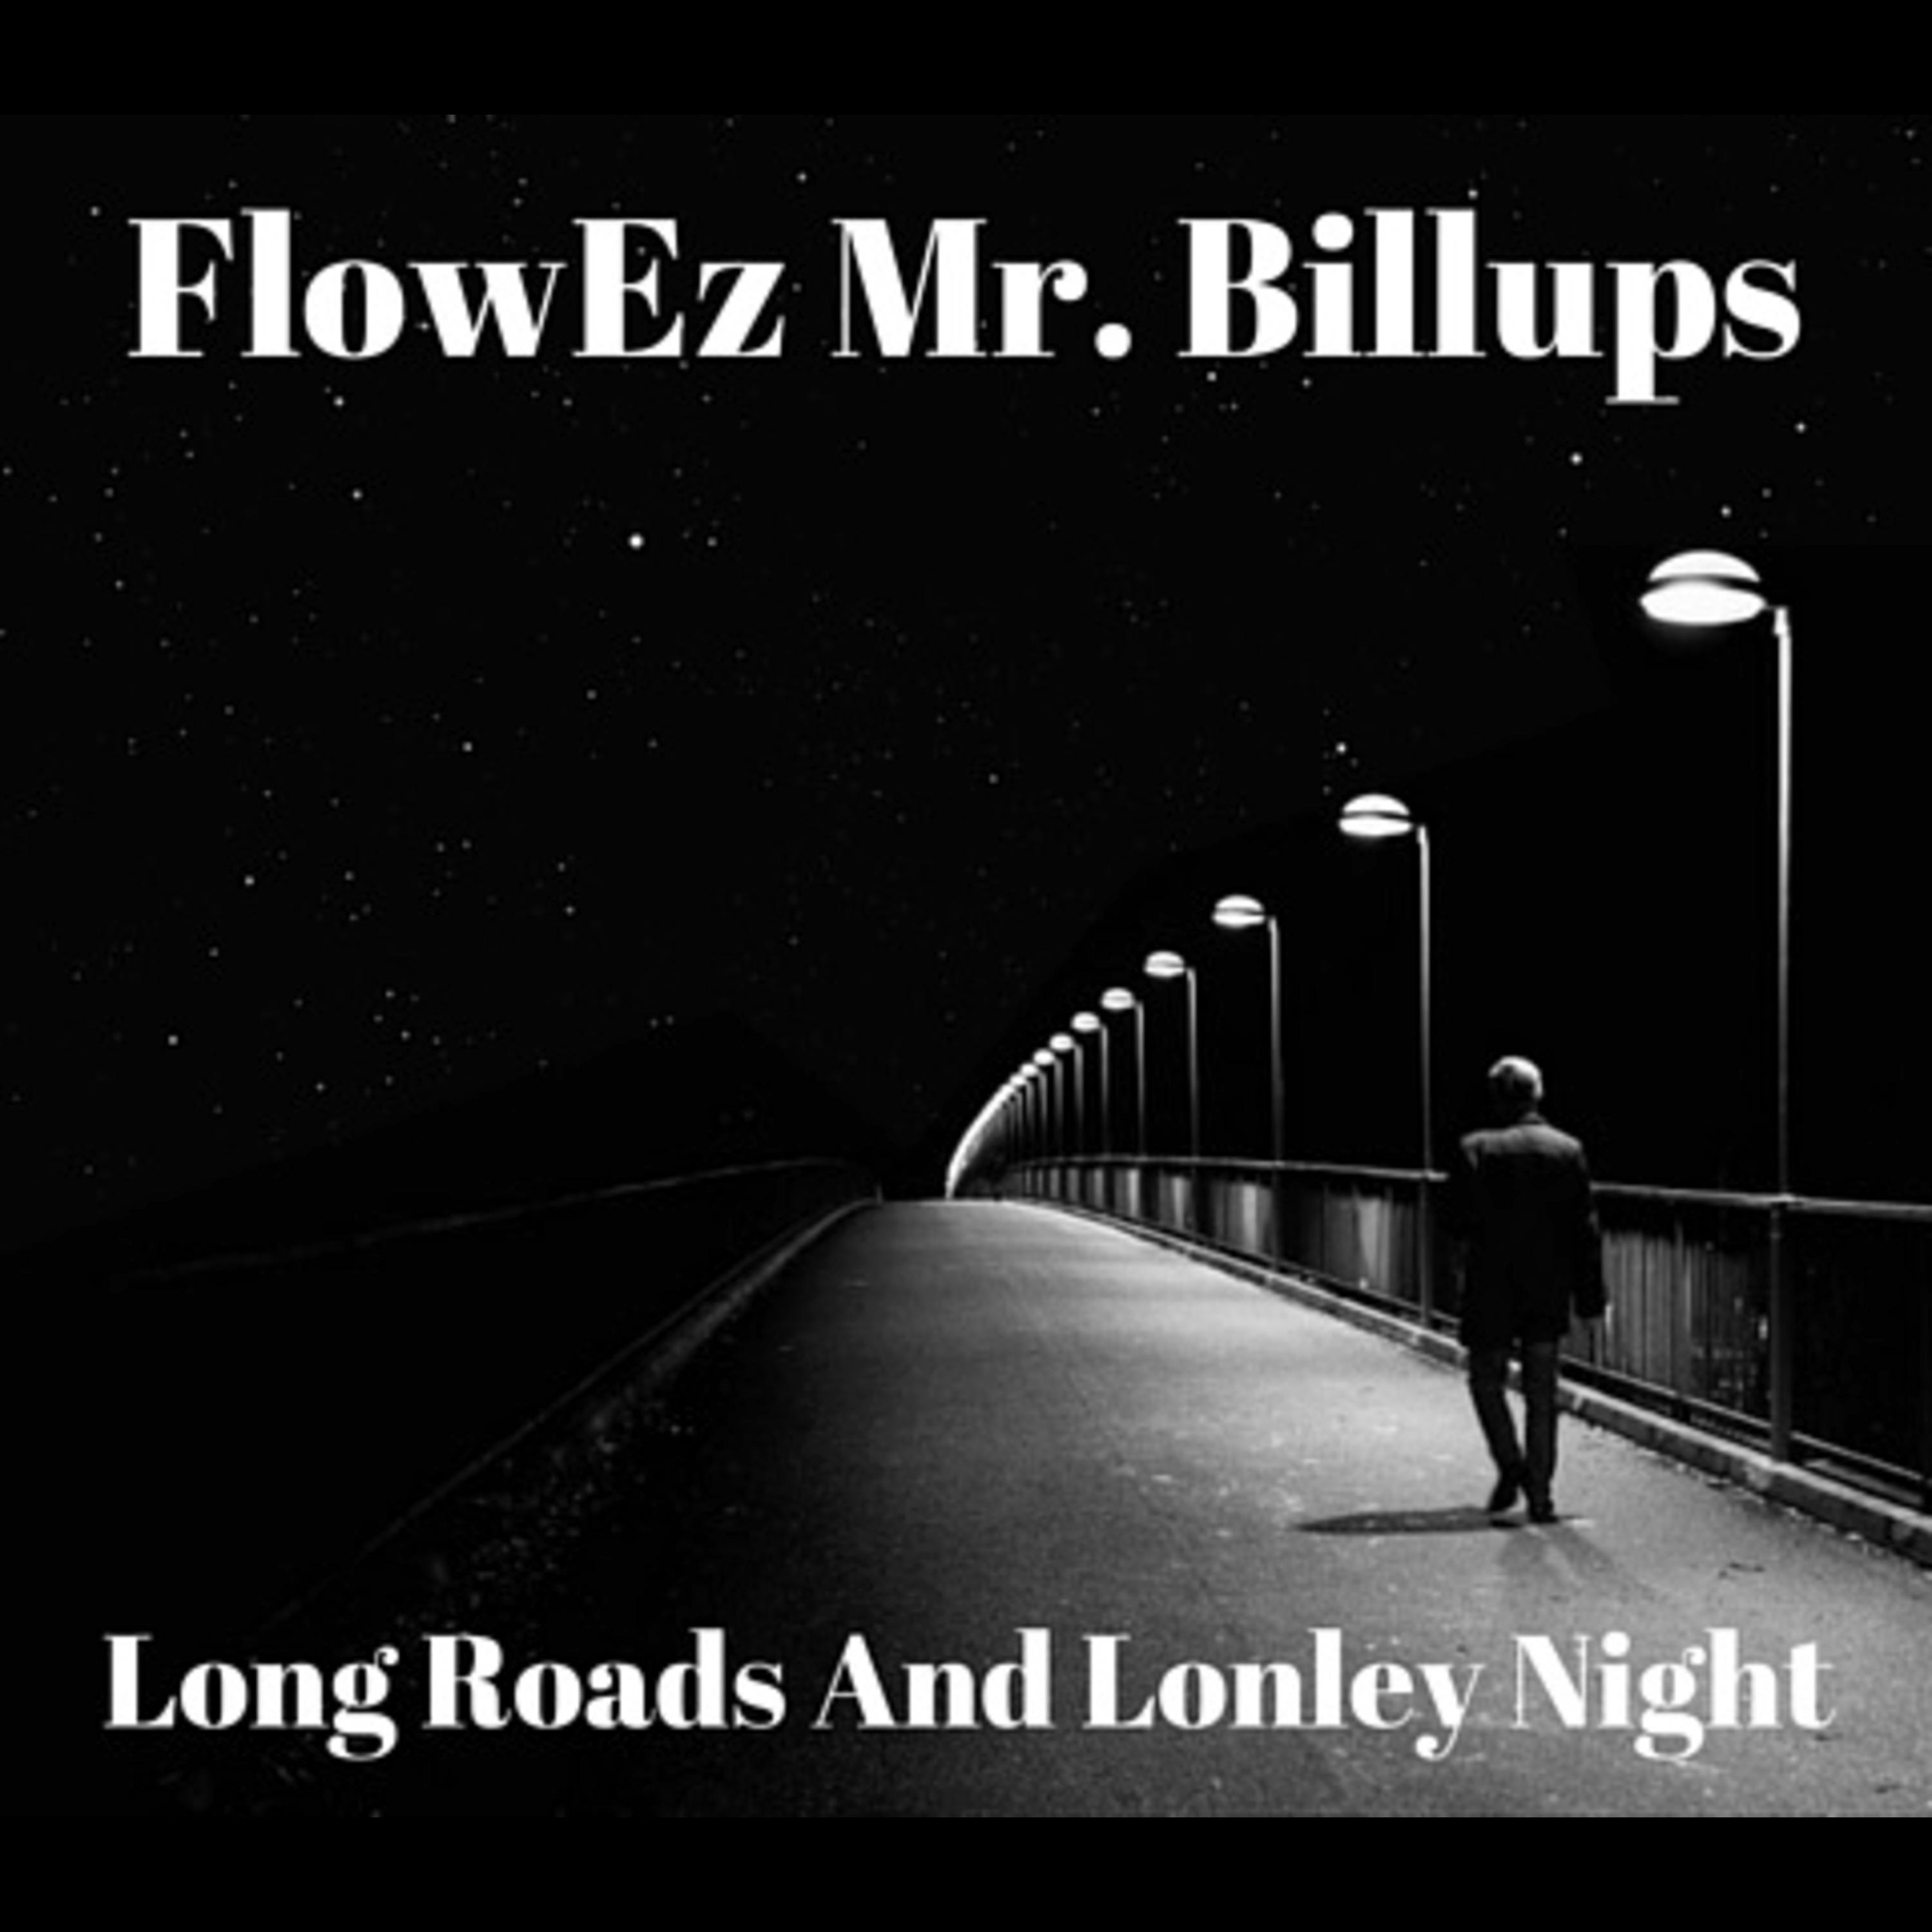 FlowEz Mr. Billups - Chapters in My Life